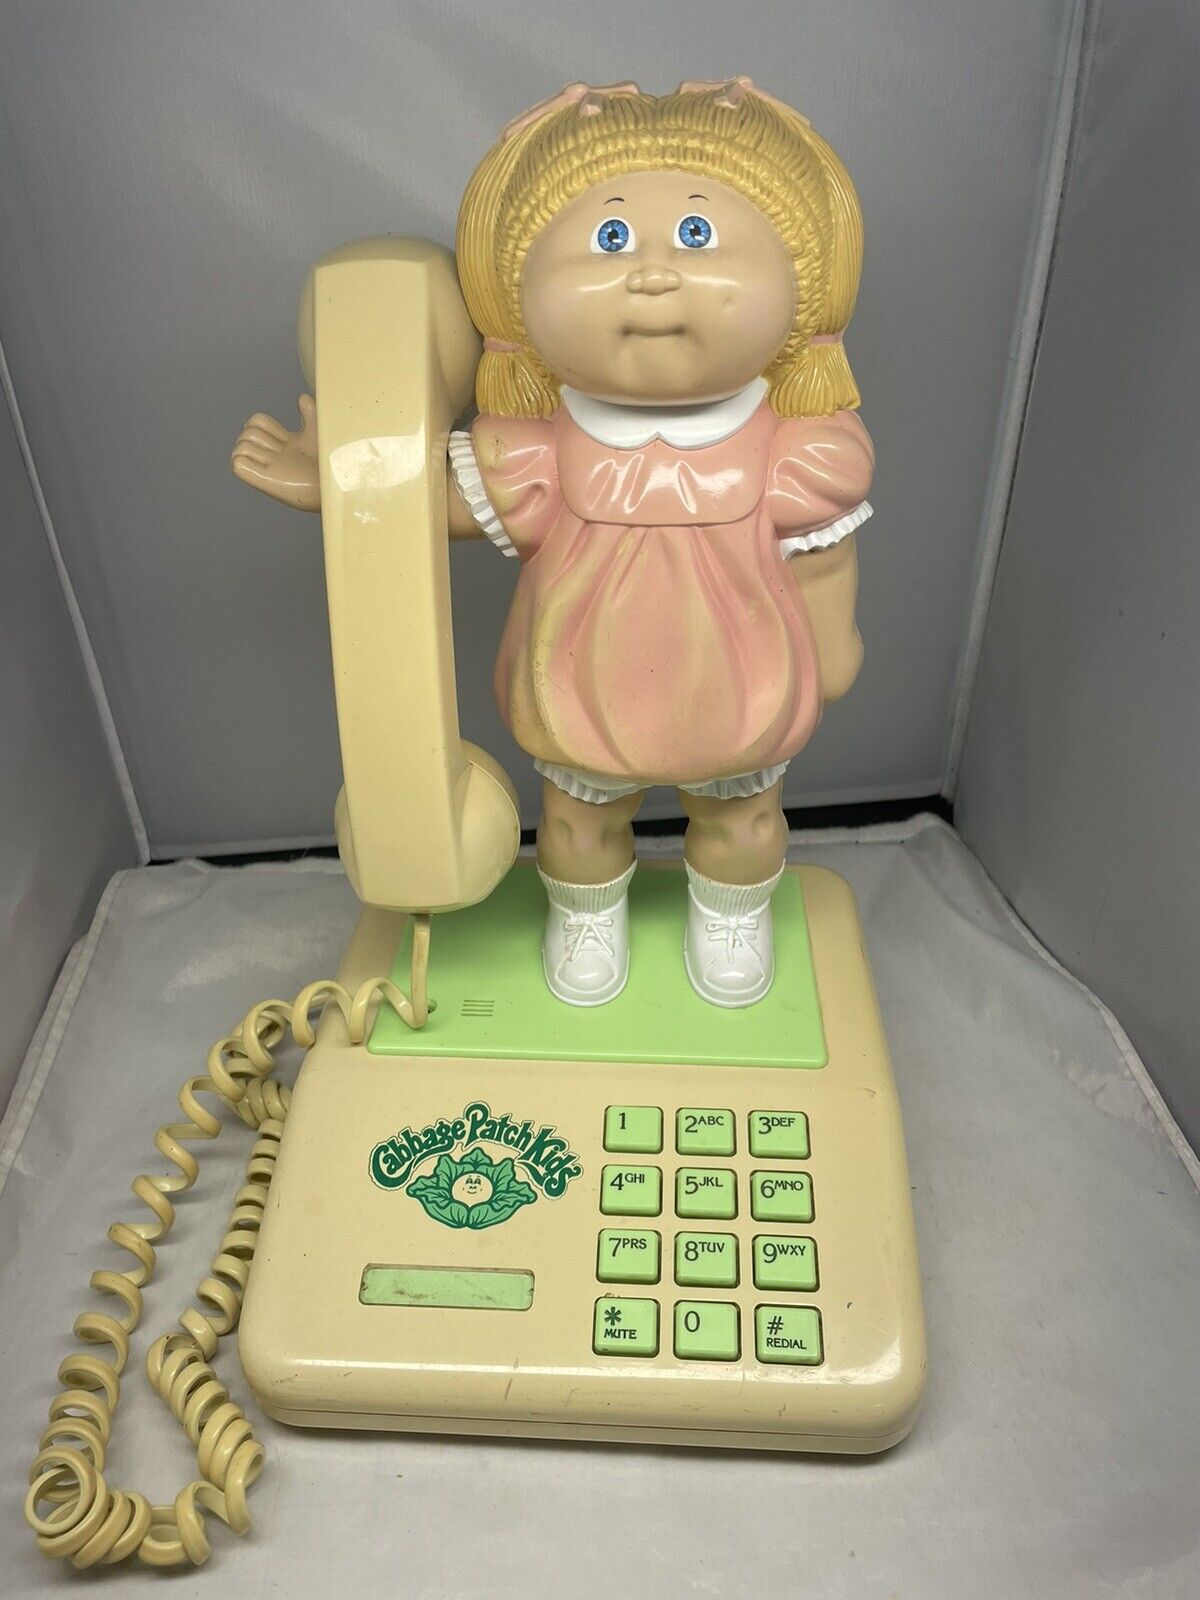 Vintage CABBAGE PATCH KIDS COLECO LANDLINE PHONE / PULSE DIALING 1984 Untested